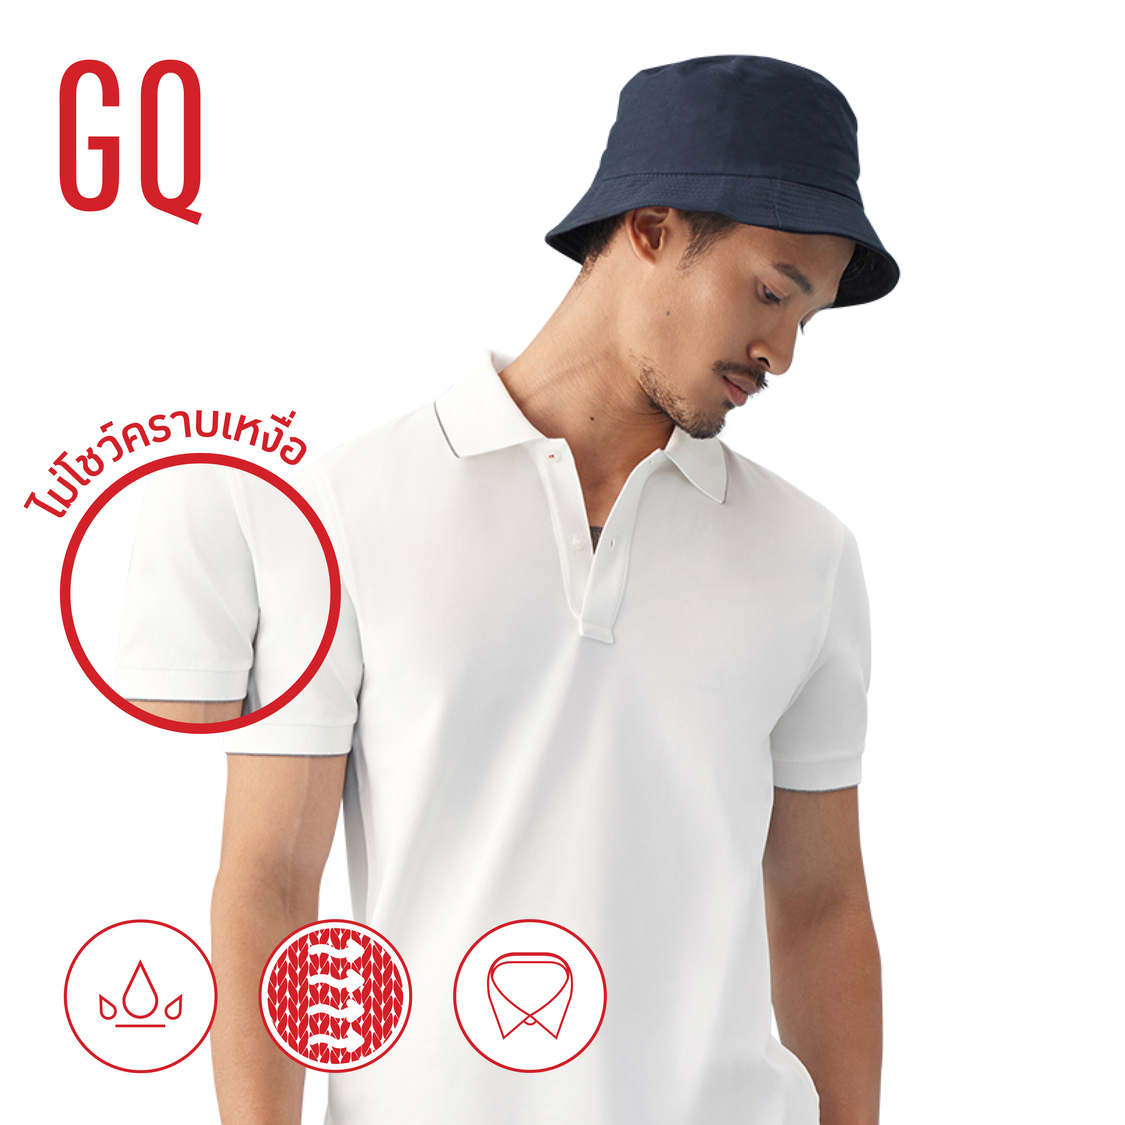 GQ PerfectPolo เสื้อโปโล ผ้าสะท้อนน้ำ อำพรางคาบเหงื่อ สี Classic (Black, White, Med Grey, Charcoal, Heather Blue, Navy) Perfect Polo Shirt